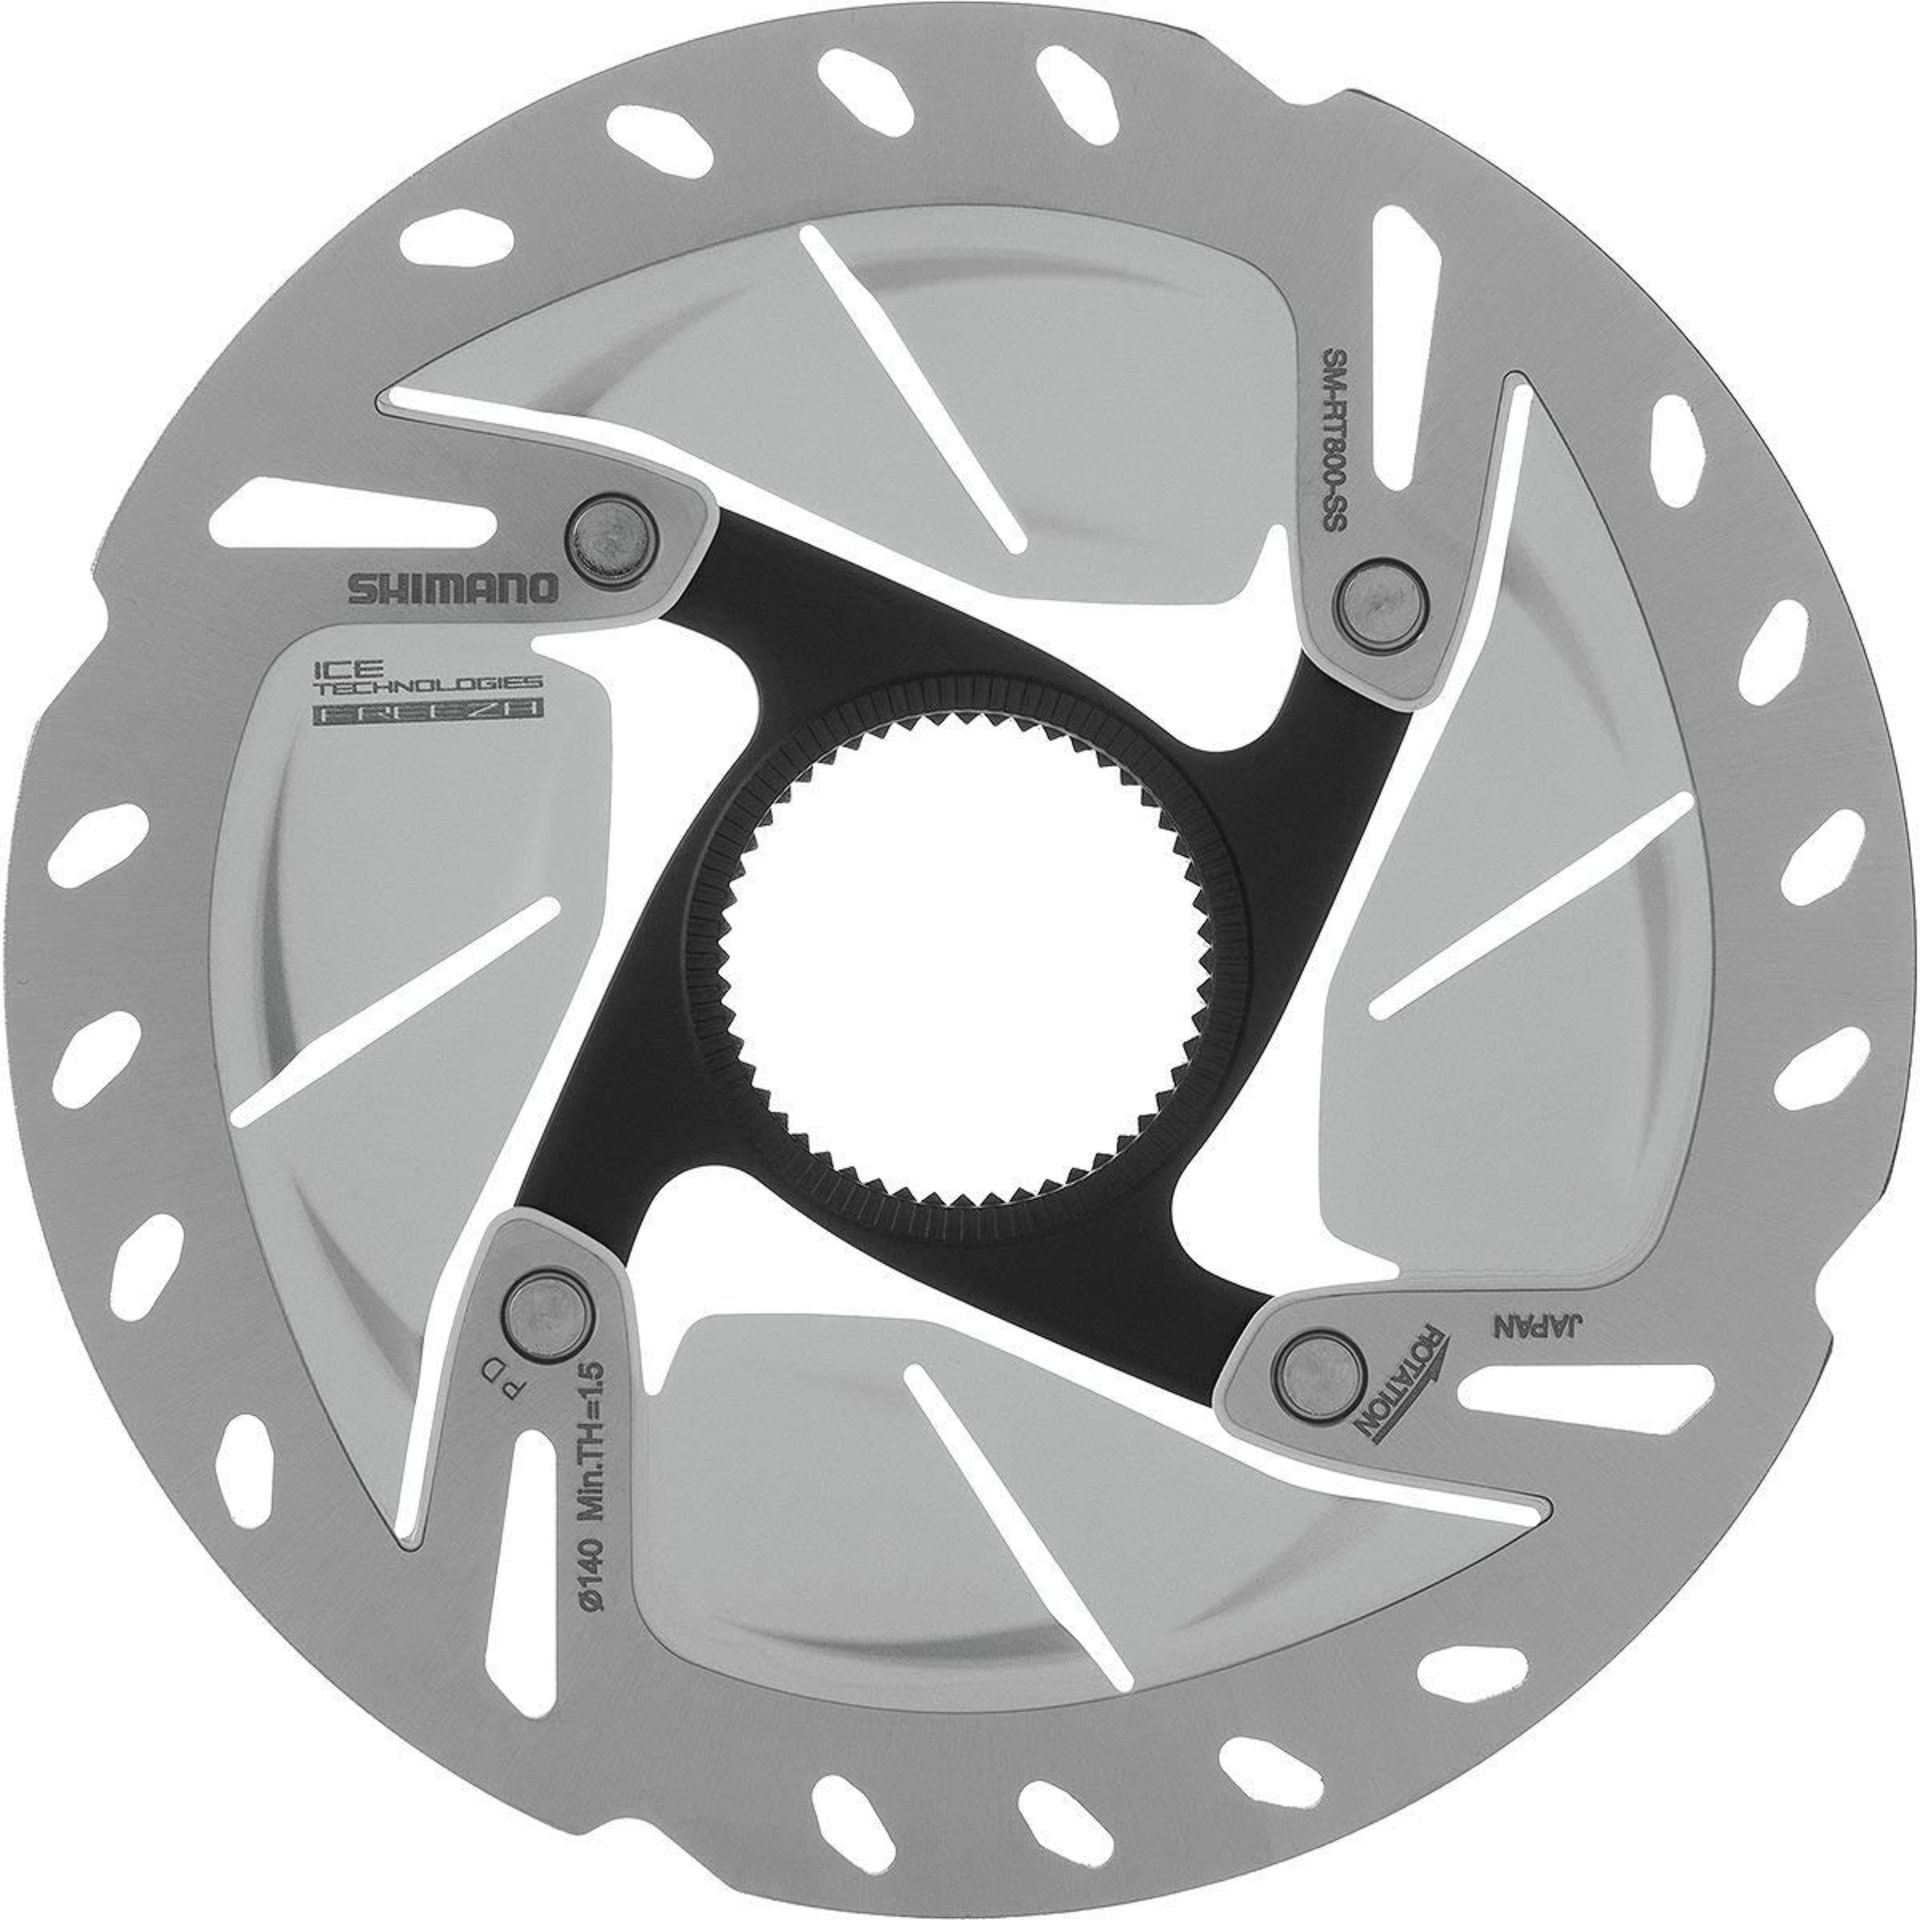 4 x Shimano Brake Discs & Rotors | See Description for Details - Image 3 of 4